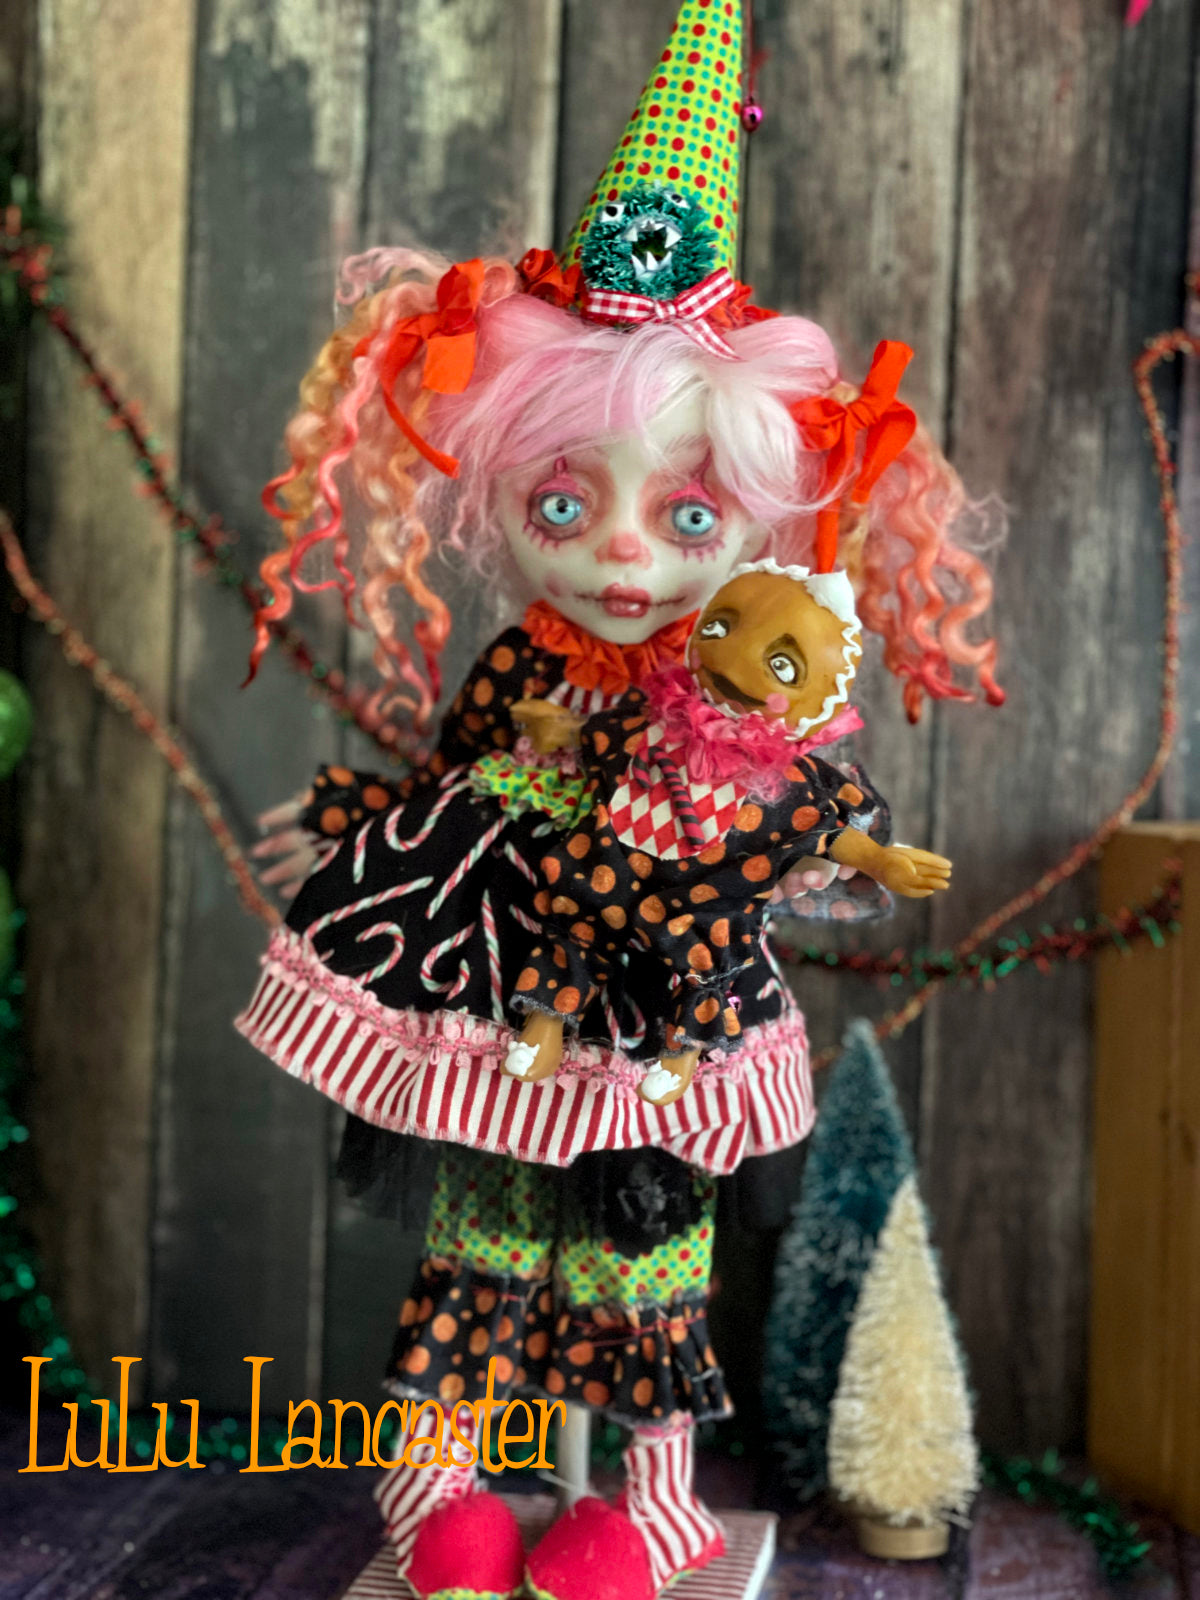 Cotton Jingles and Meg Creepmas clown Christmas winter Original LuLu Lancaster Art Doll